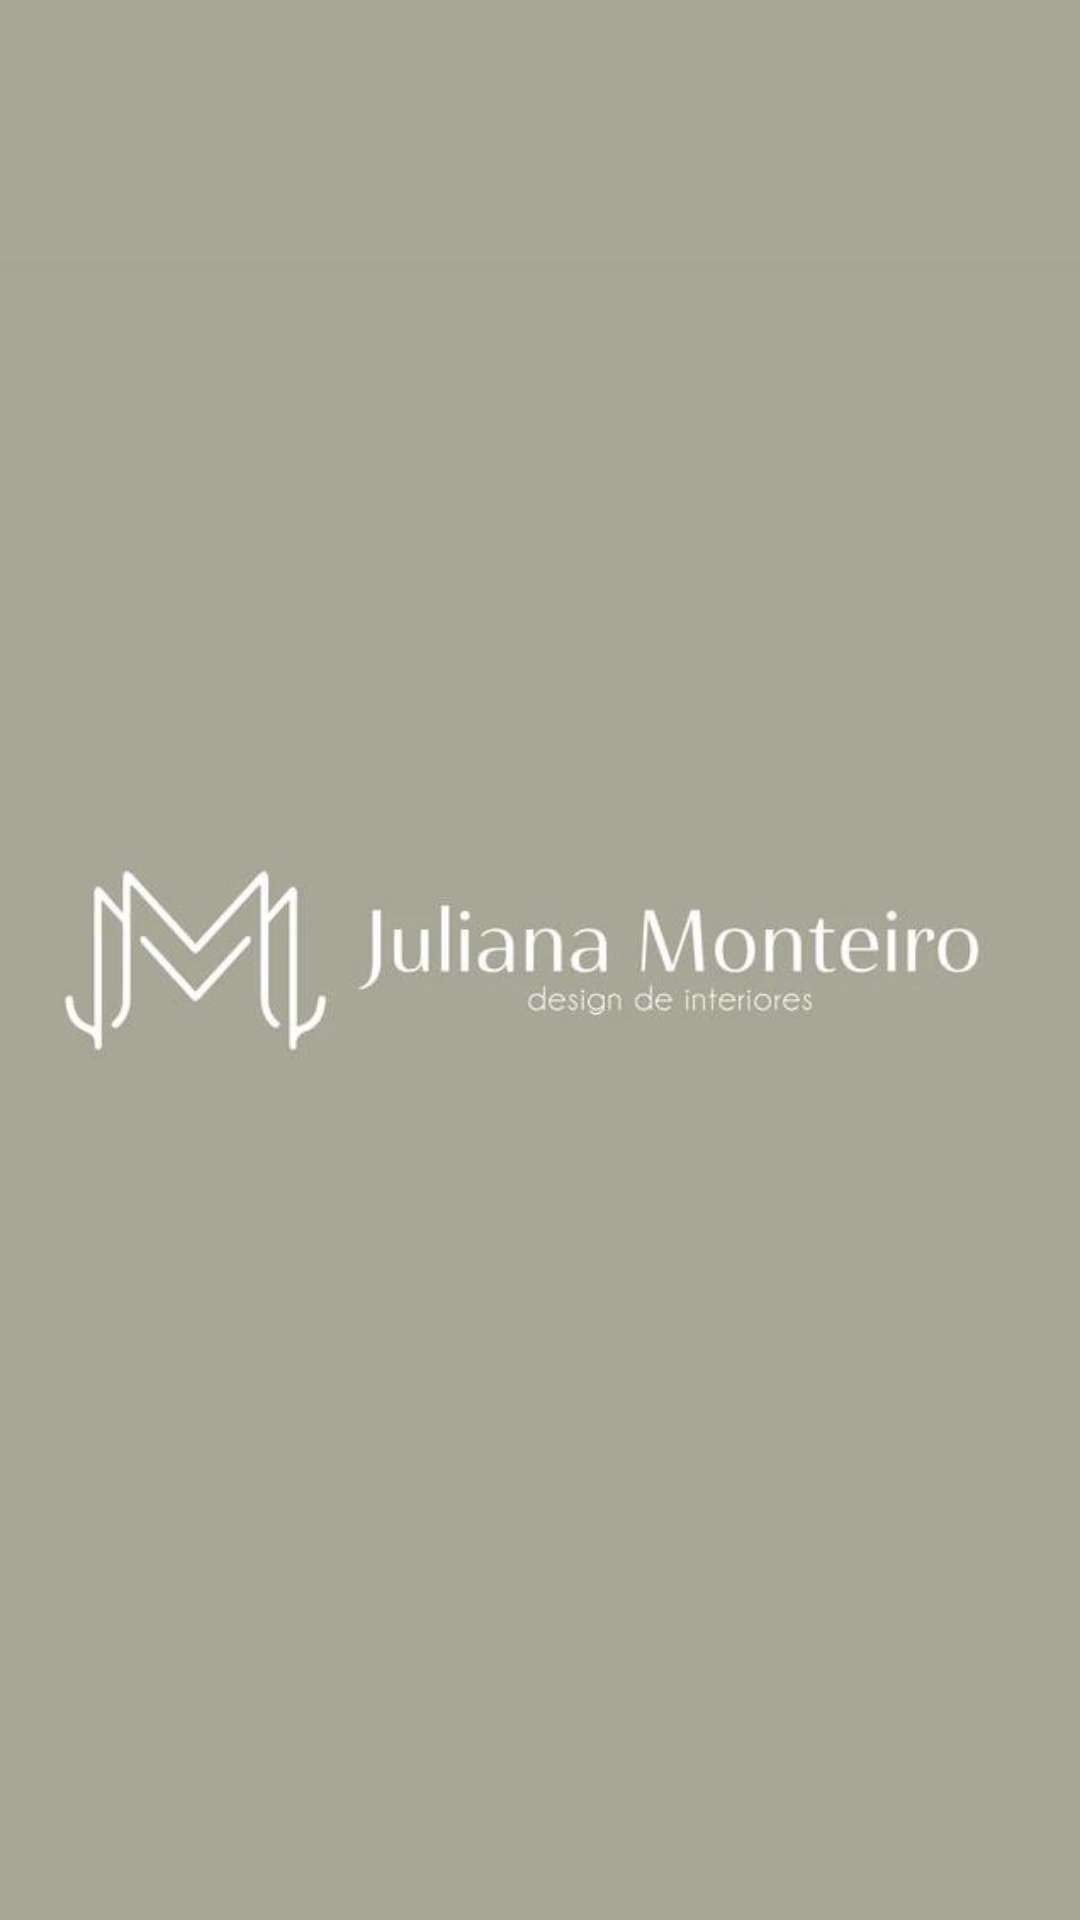 Juliana Masala Marketing - Porto - Marketing